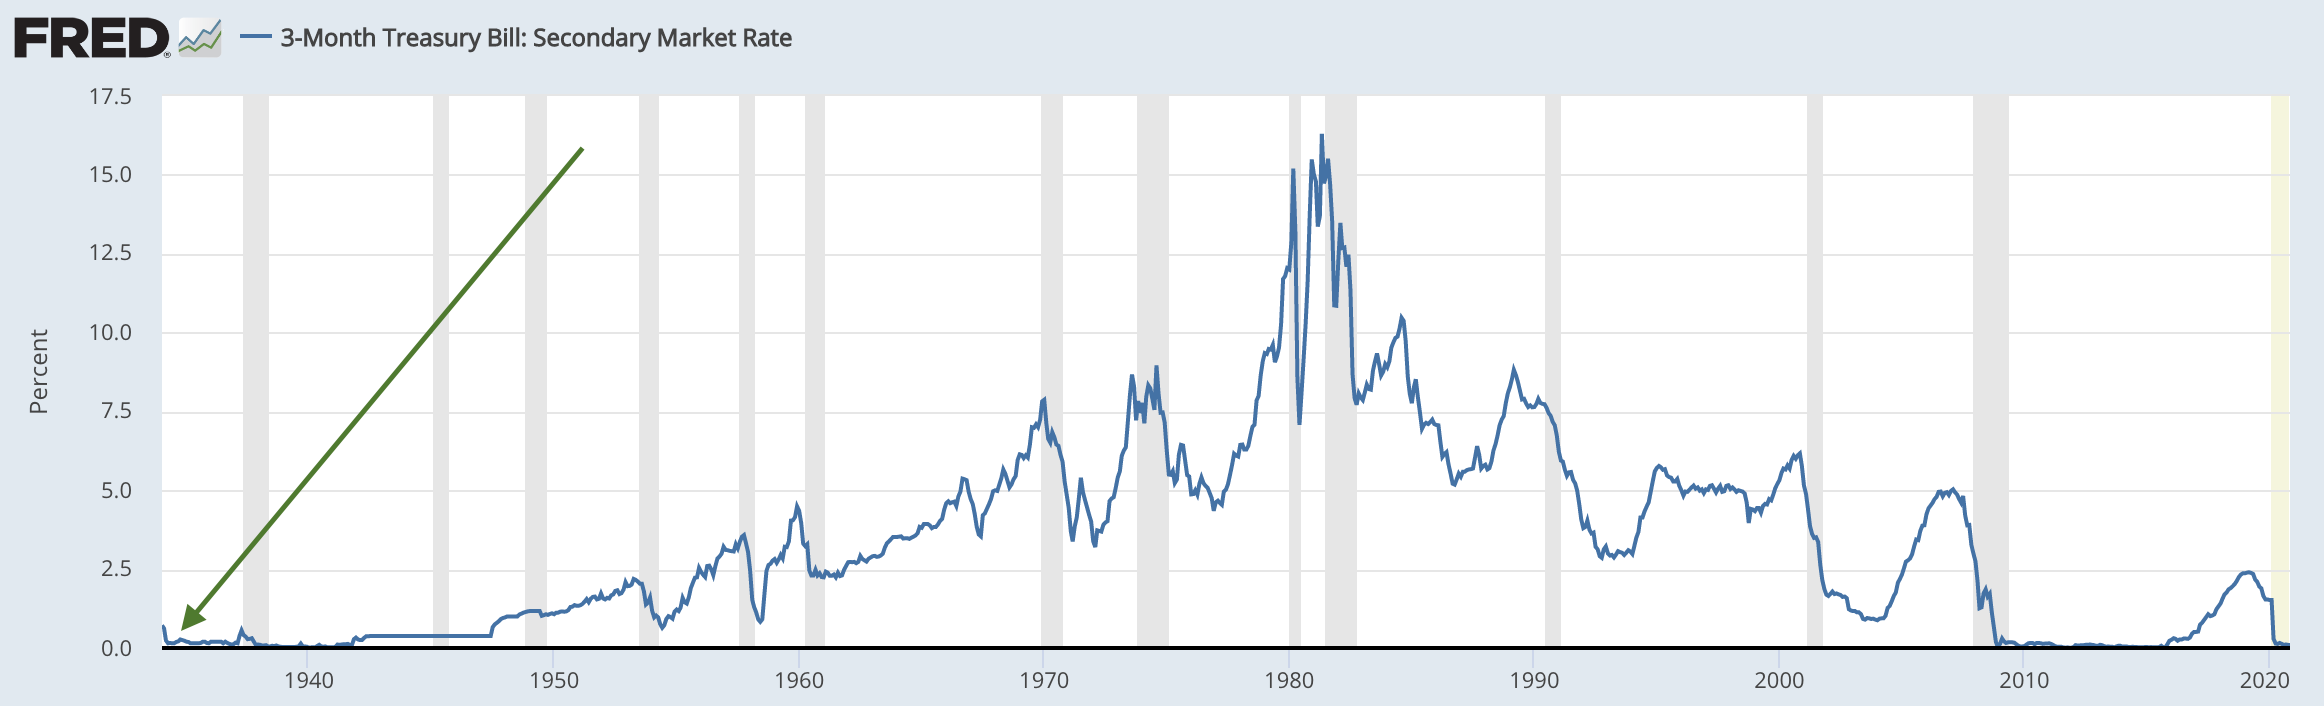 stocks overvalued interest rates